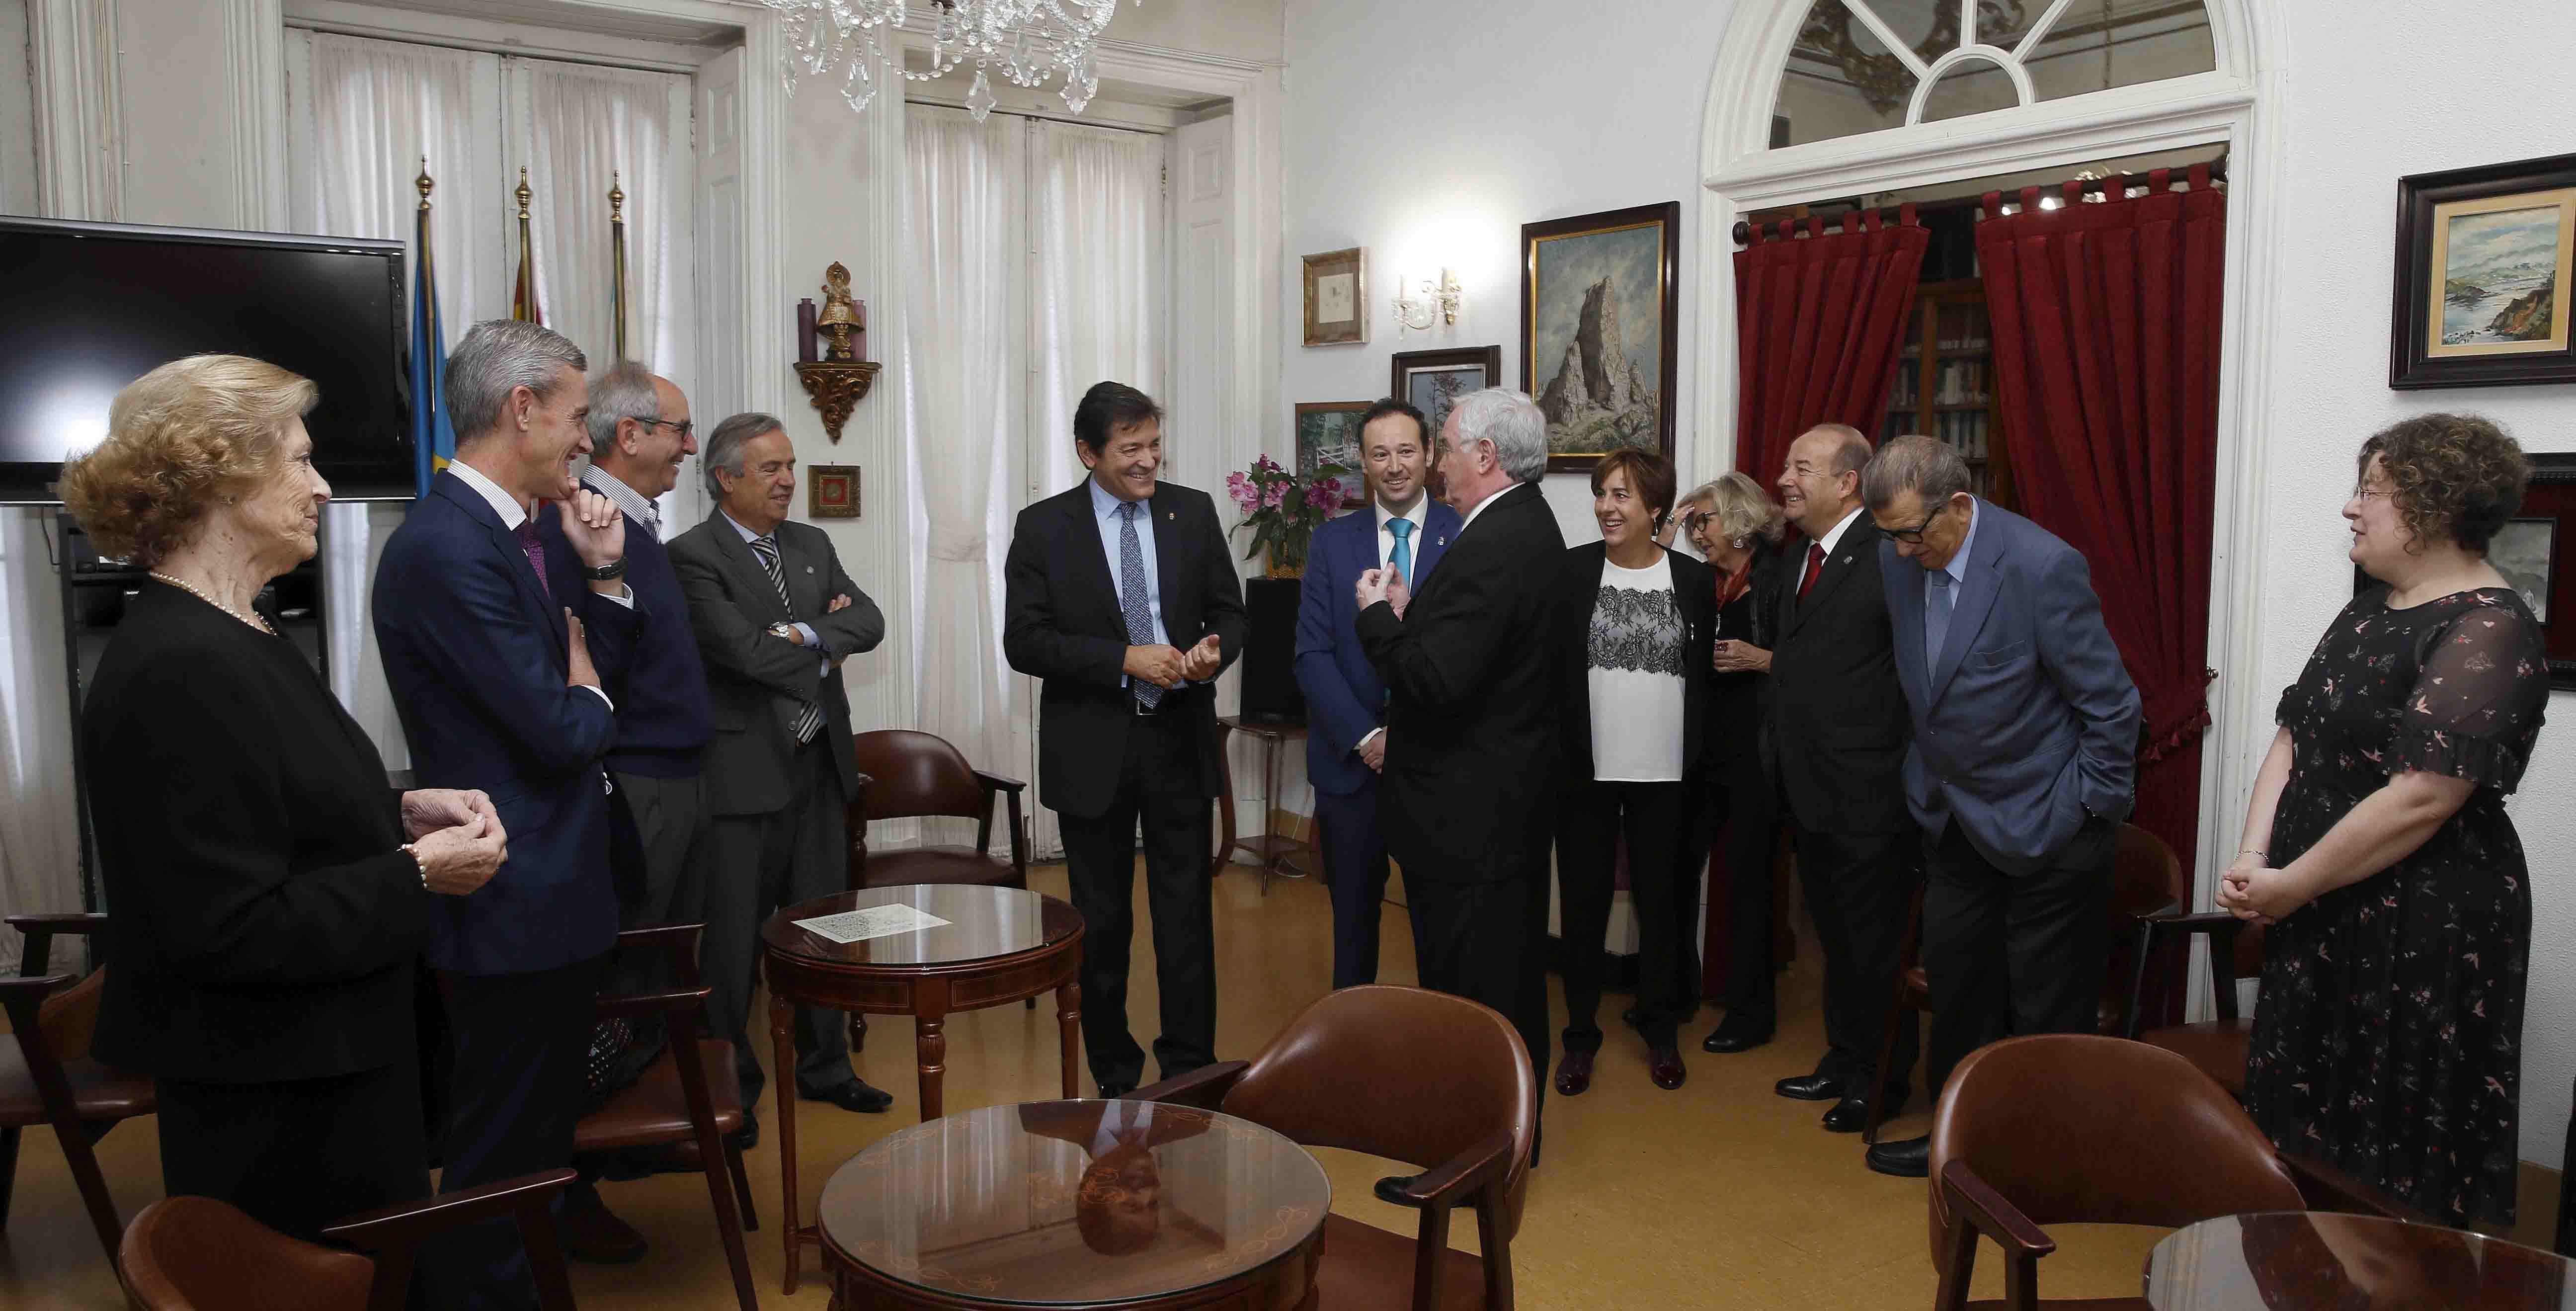 2017_11_25 presidente visita centro asturiano a crouna 1